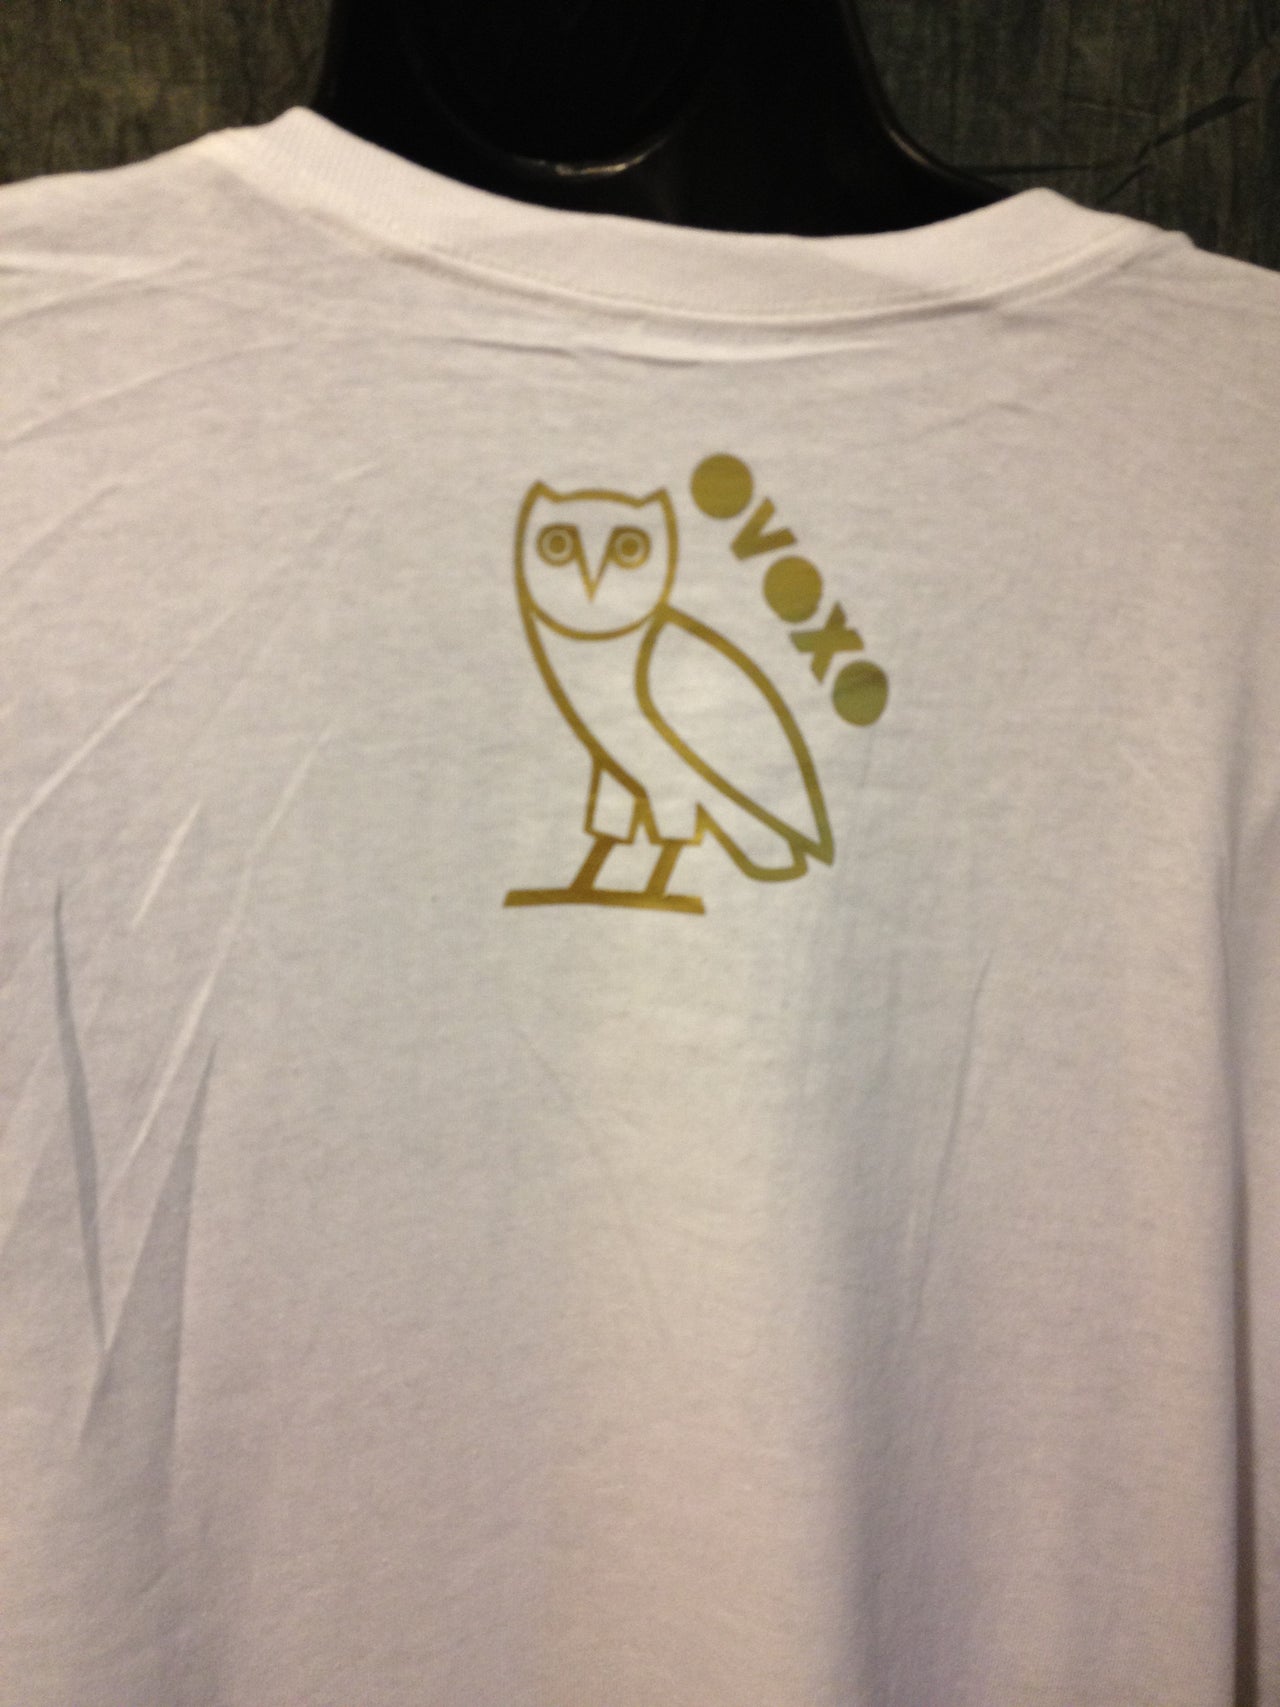 Ovo Drake October's Very Own Ovoxo Owl Gang Girls Tshirt: Gold Print on White Womens Tshirt - TshirtNow.net - 5